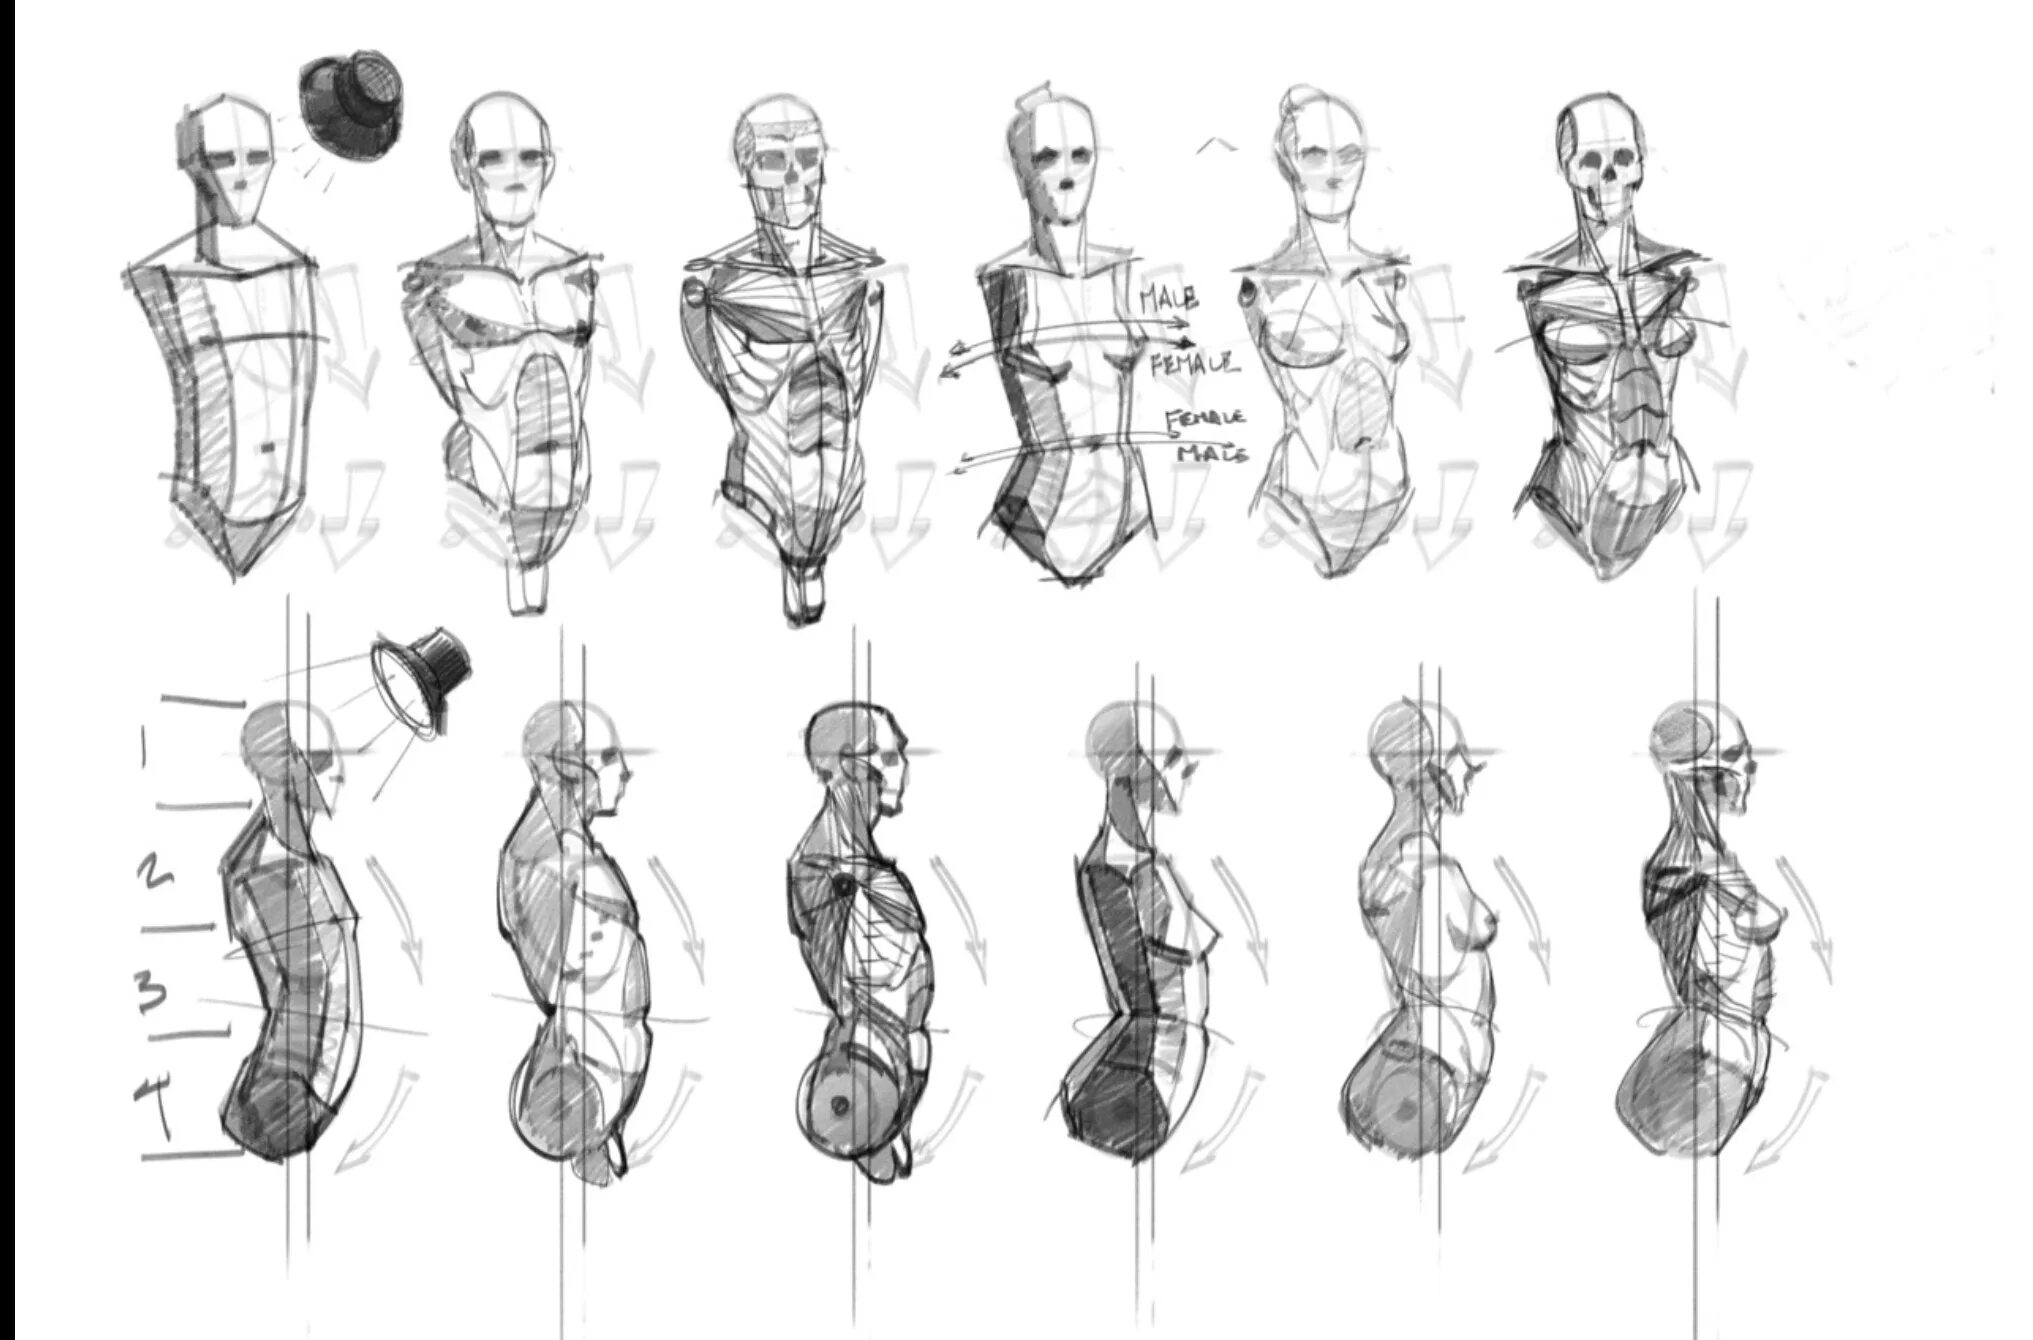 Анатомия человека референсы. Анатомия человеческого тела референсы. Анатомия фигура человека референс. Человек в профиль анатомия референс. Detailed reference